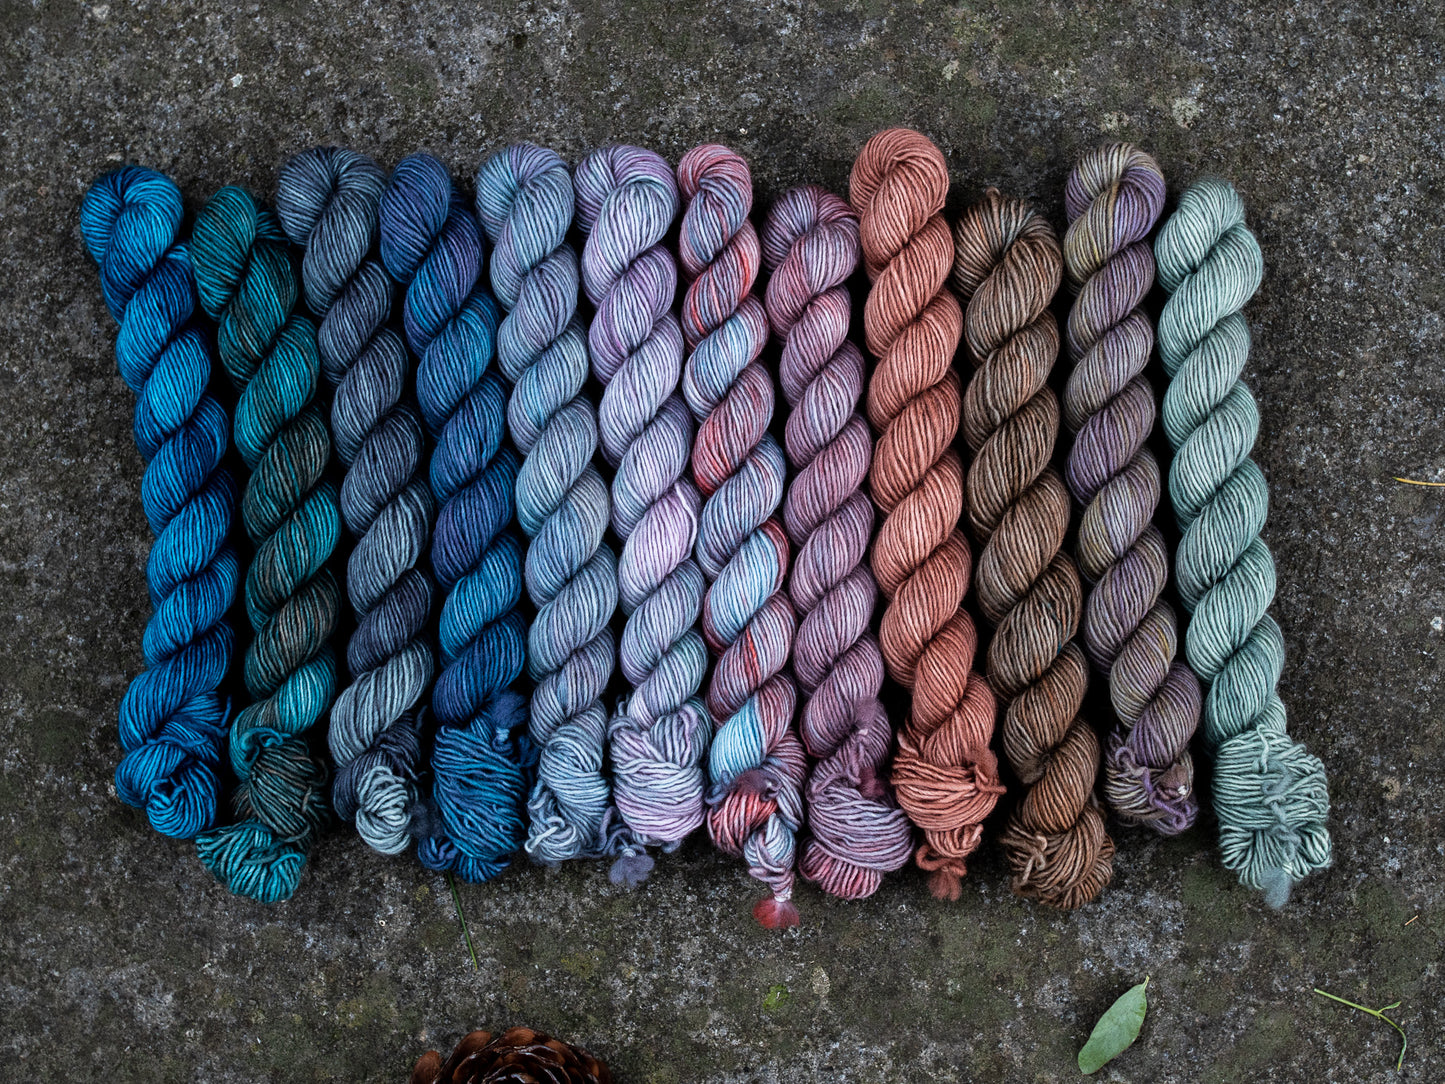 Winter Wonderland collection - 12 colors mini skeins set